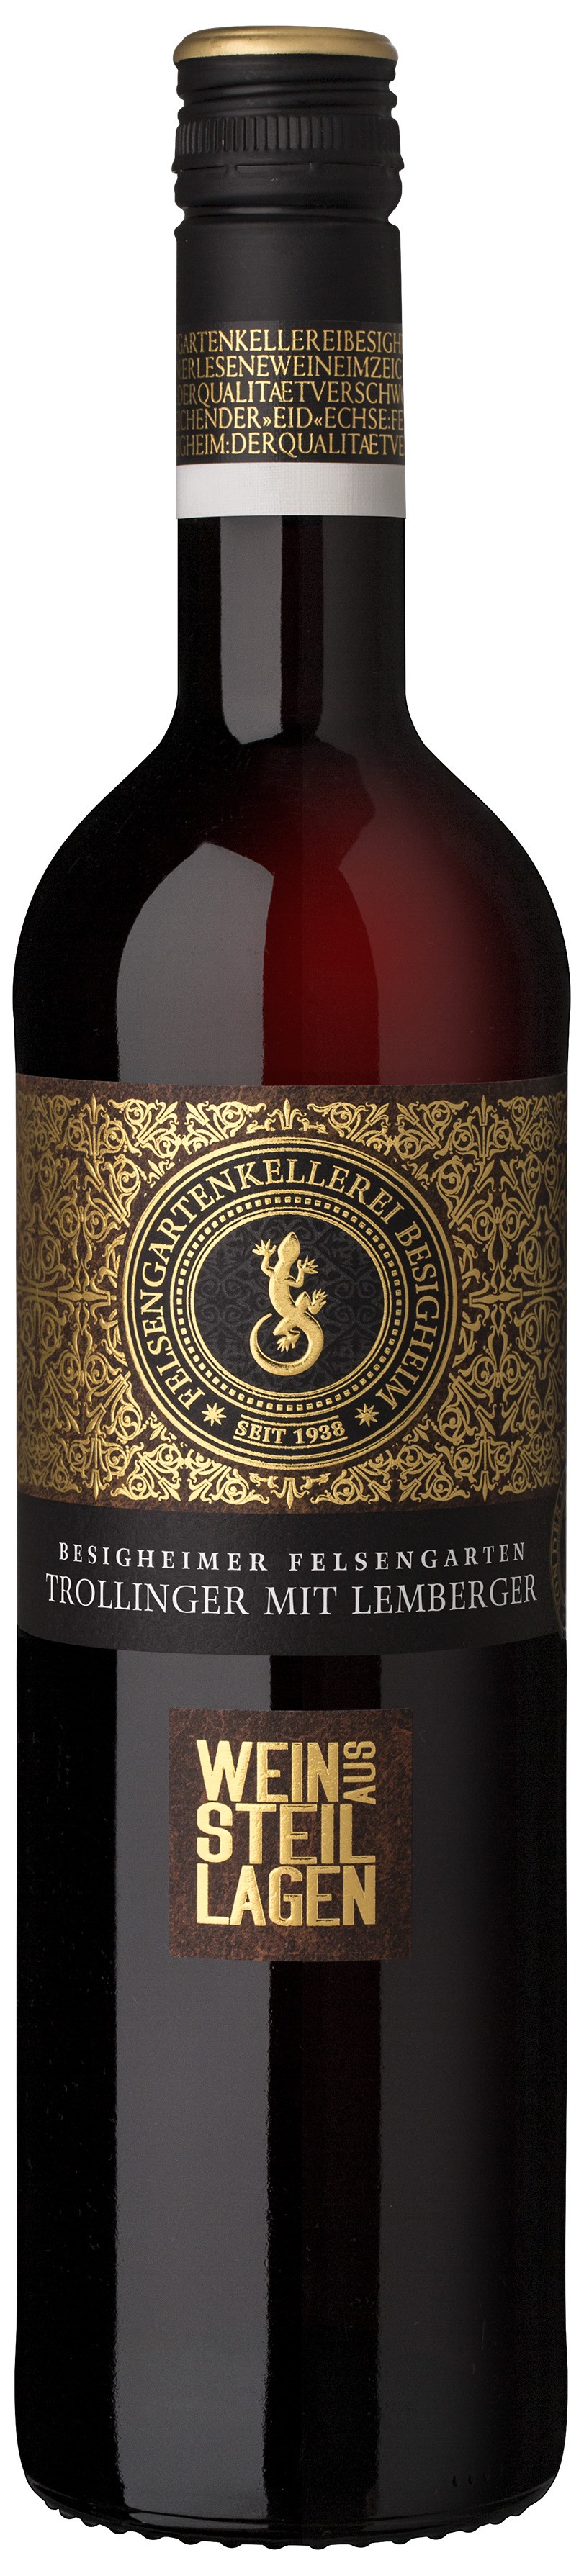 Besigheimer Felsengarten  Steillagen  Trollinger mit Lemberger Qualitätswein